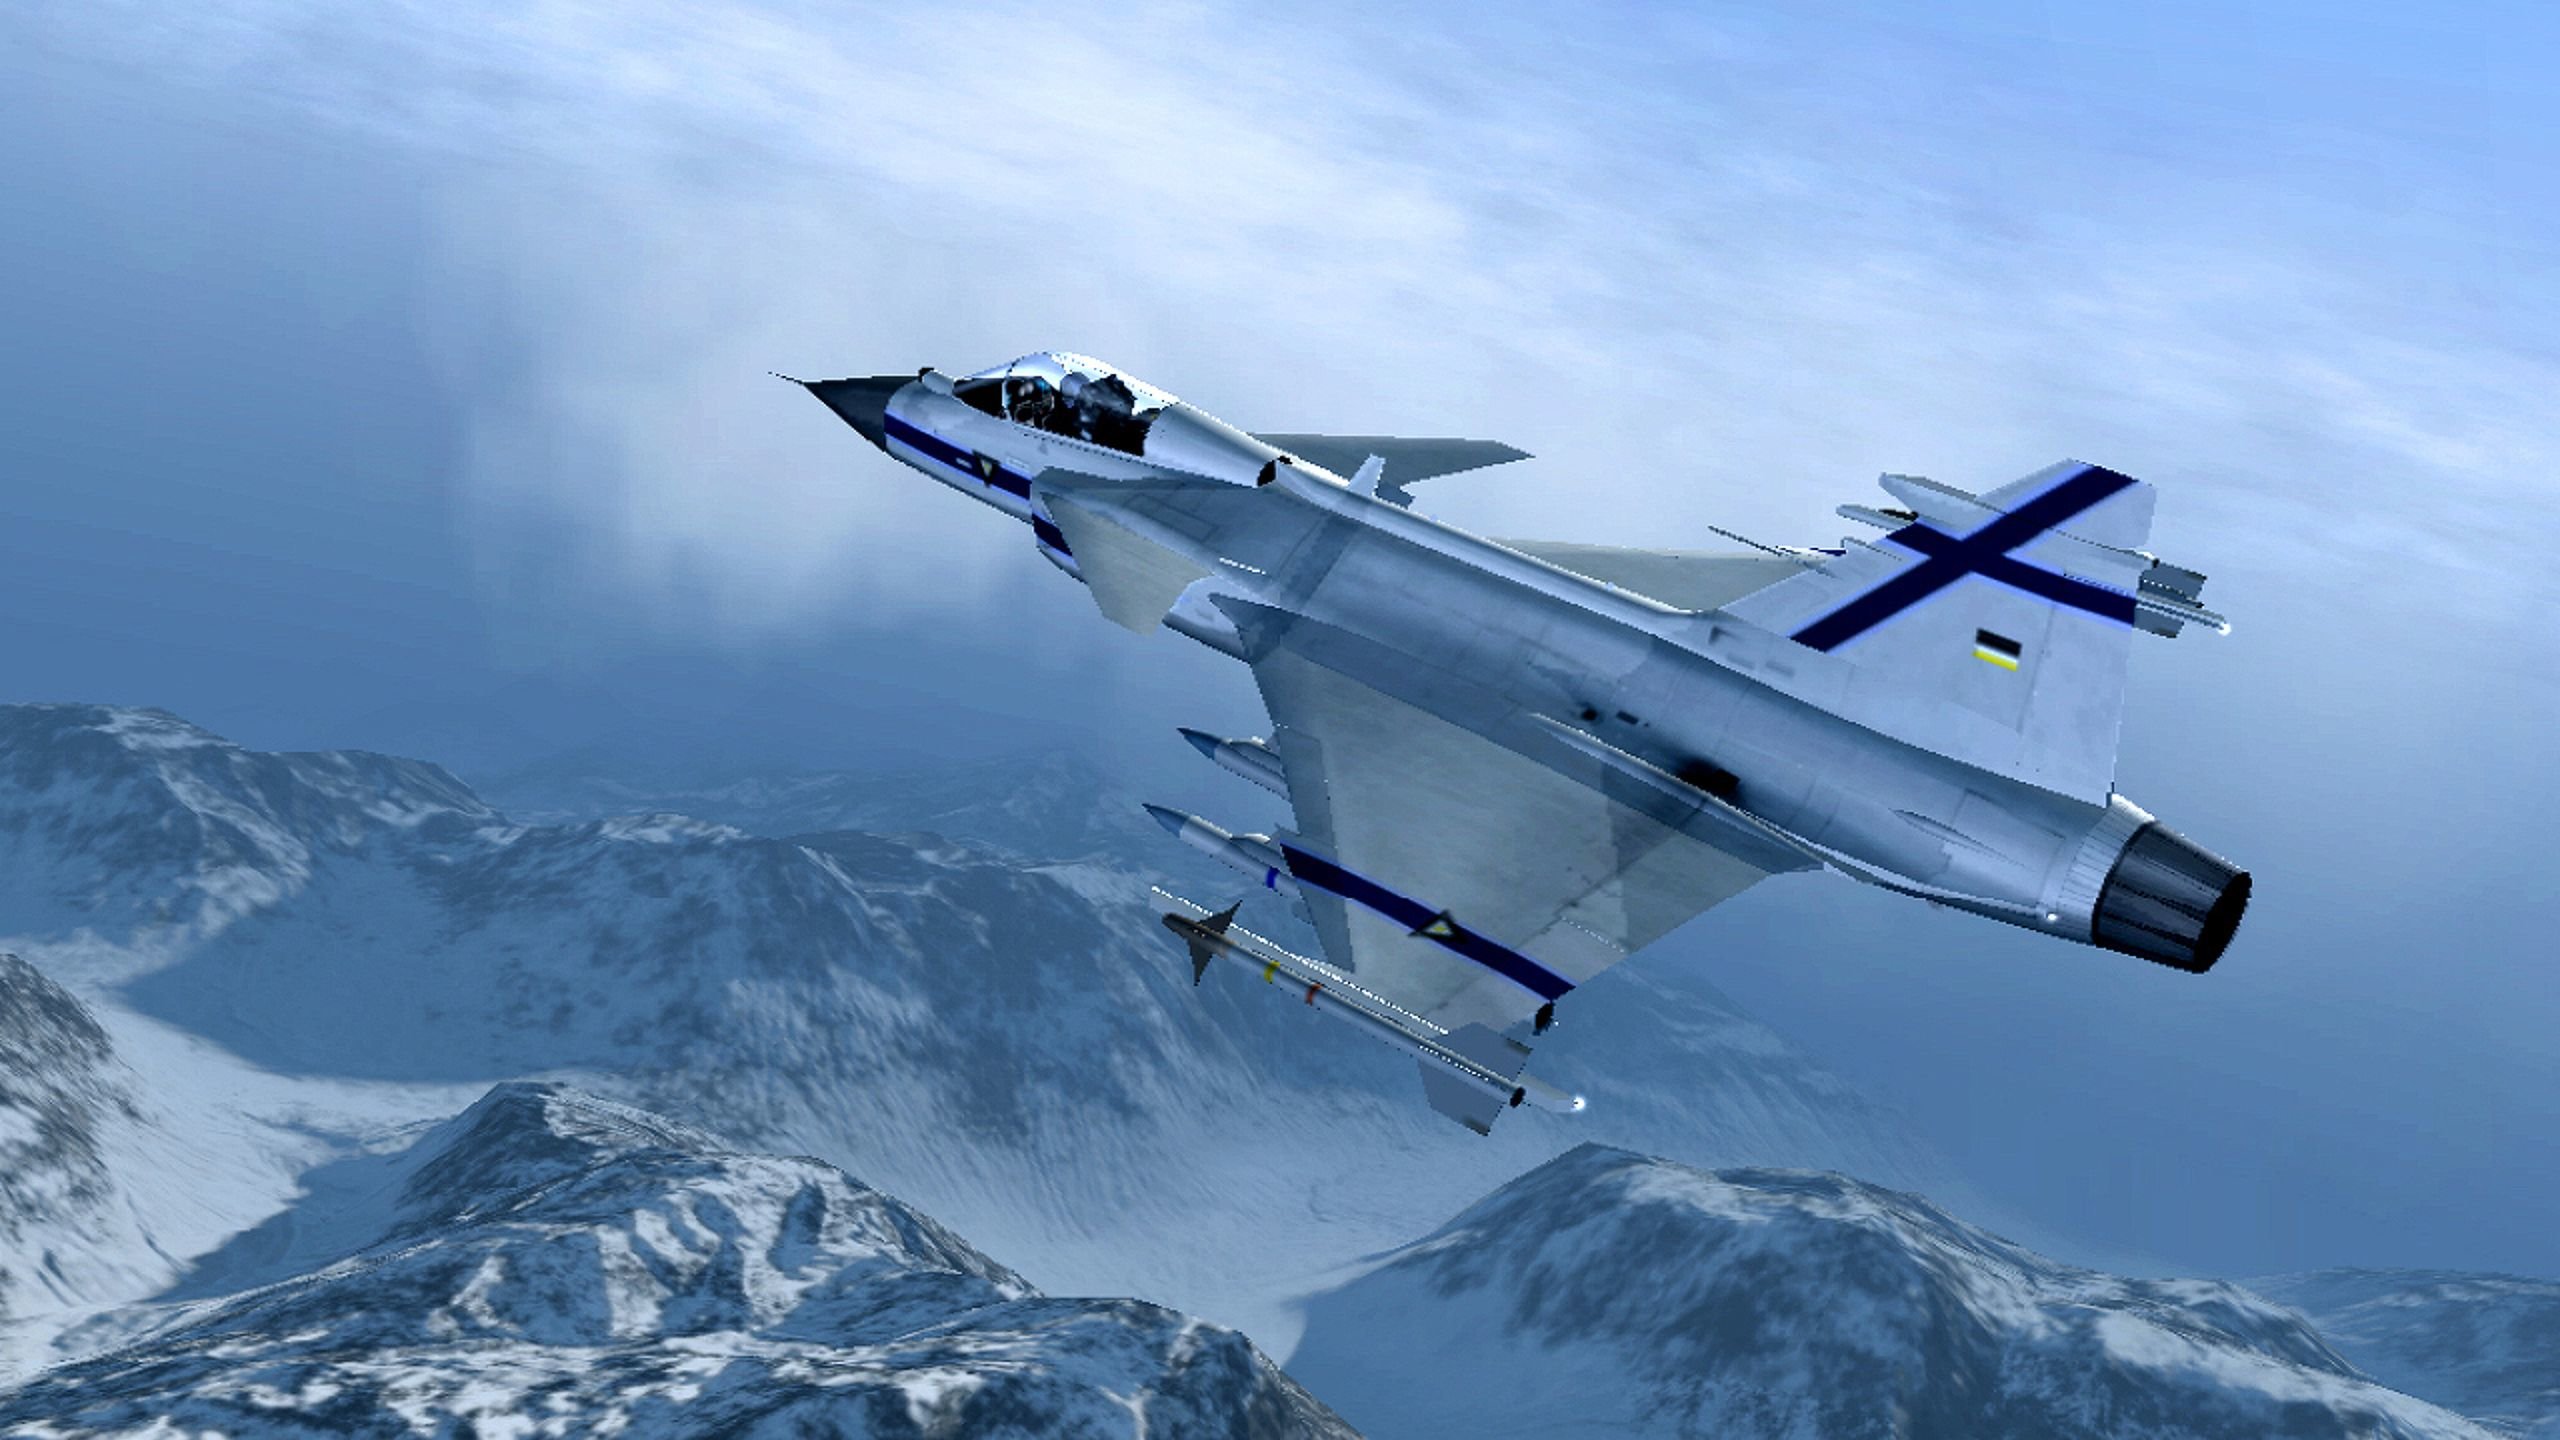 ace combat wallpaper,aircraft,airplane,military aircraft,air force,jet aircraft